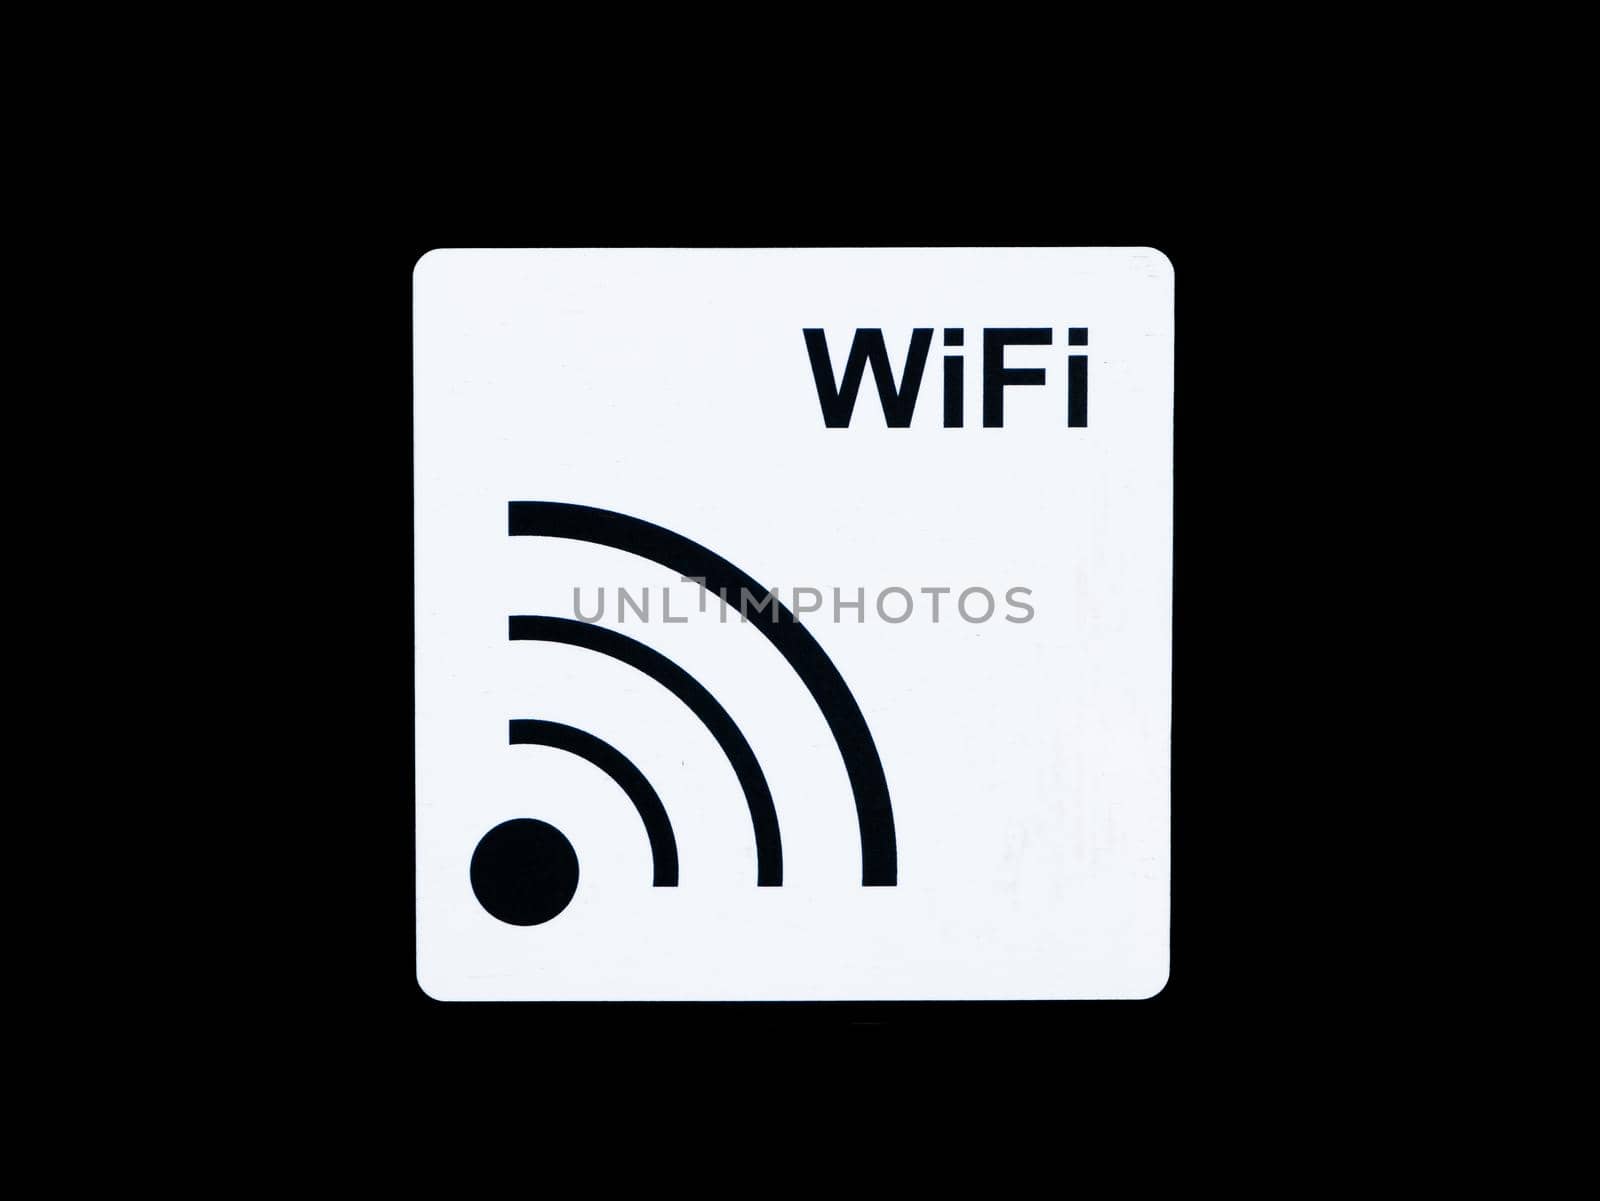 Wifi white square sign on dark background by harukoro